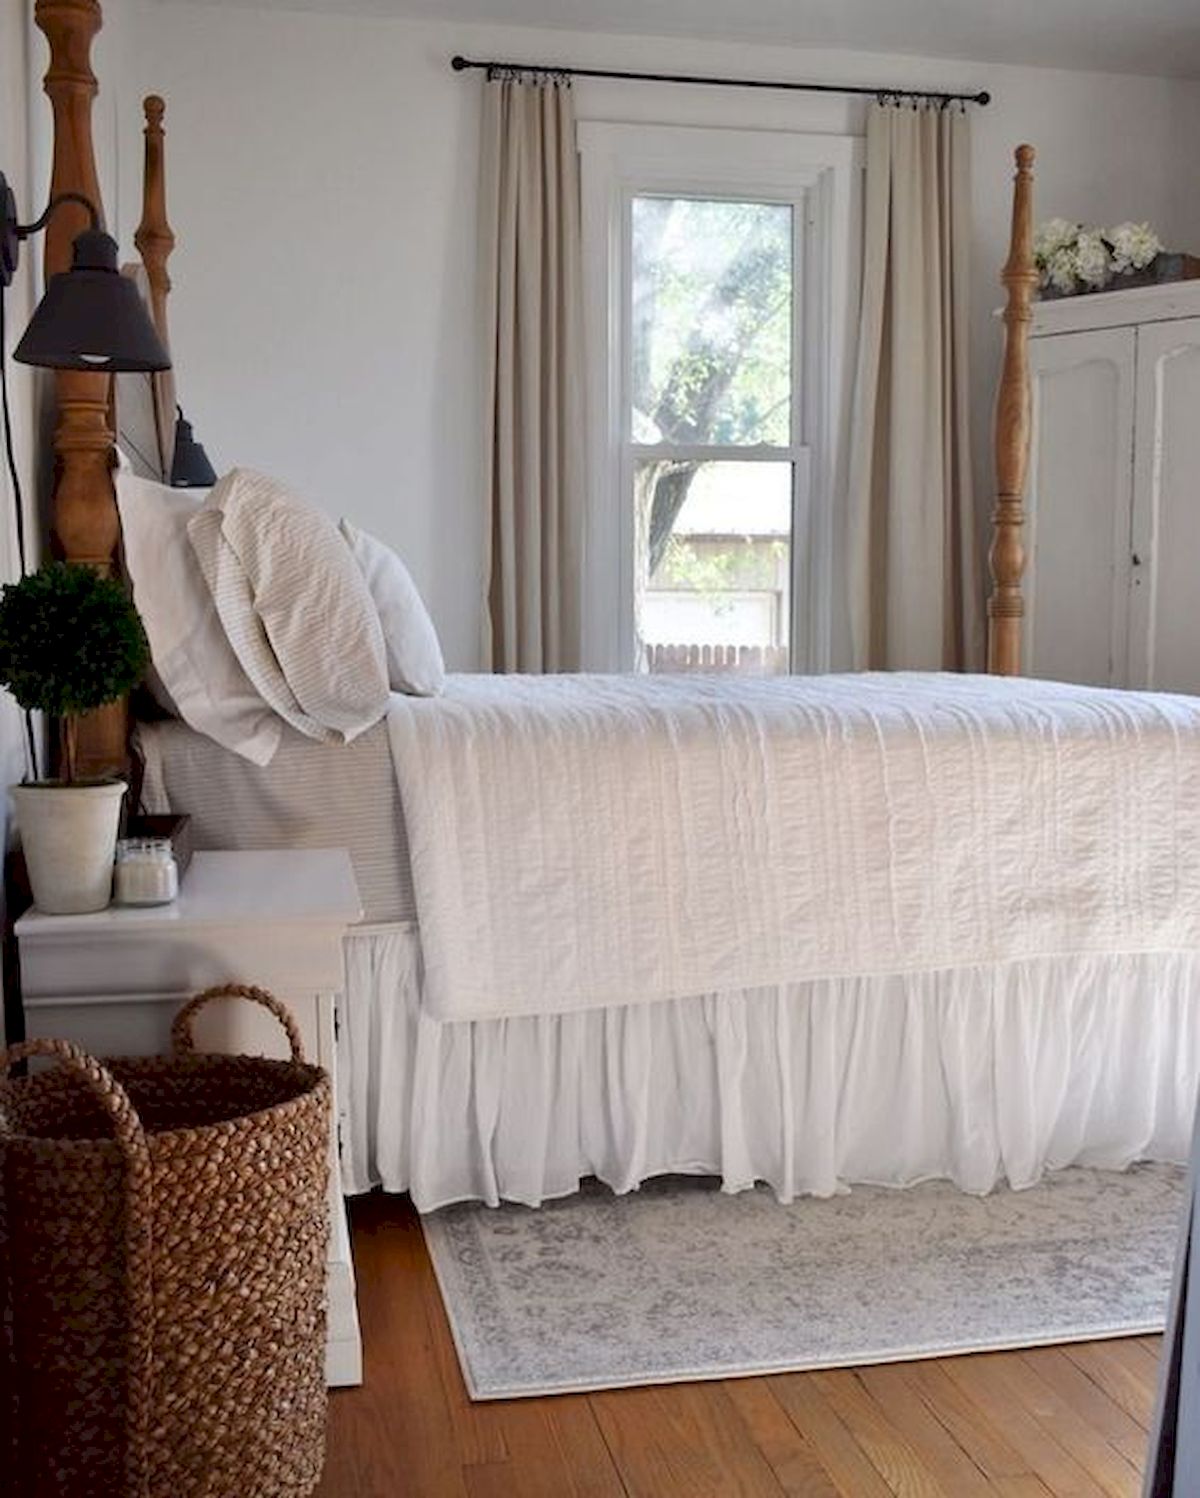 50 Amazing Modern Bedroom Decoration Ideas With Luxury Design (35)